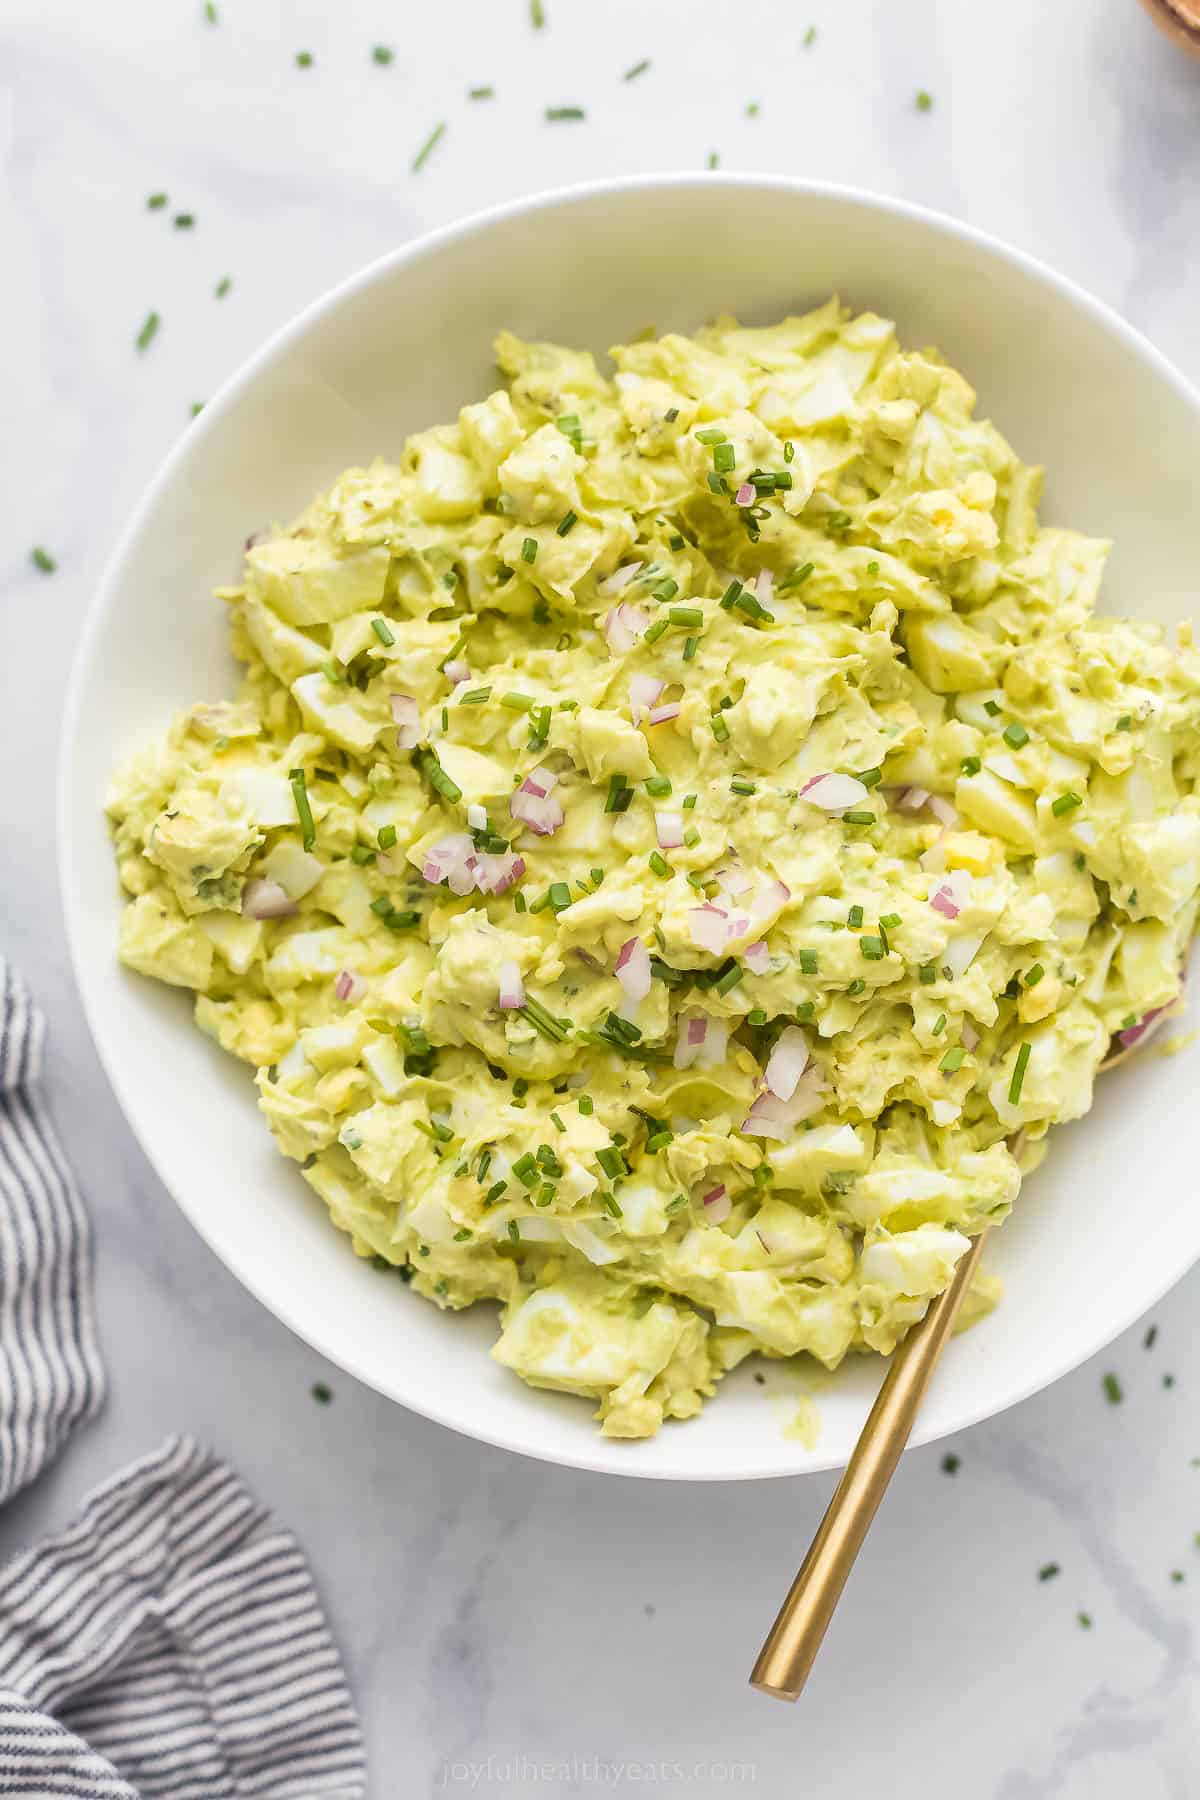 https://www.joyfulhealthyeats.com/wp-content/uploads/2014/03/Avocado-Egg-Salad-Recipe-web-8.jpg